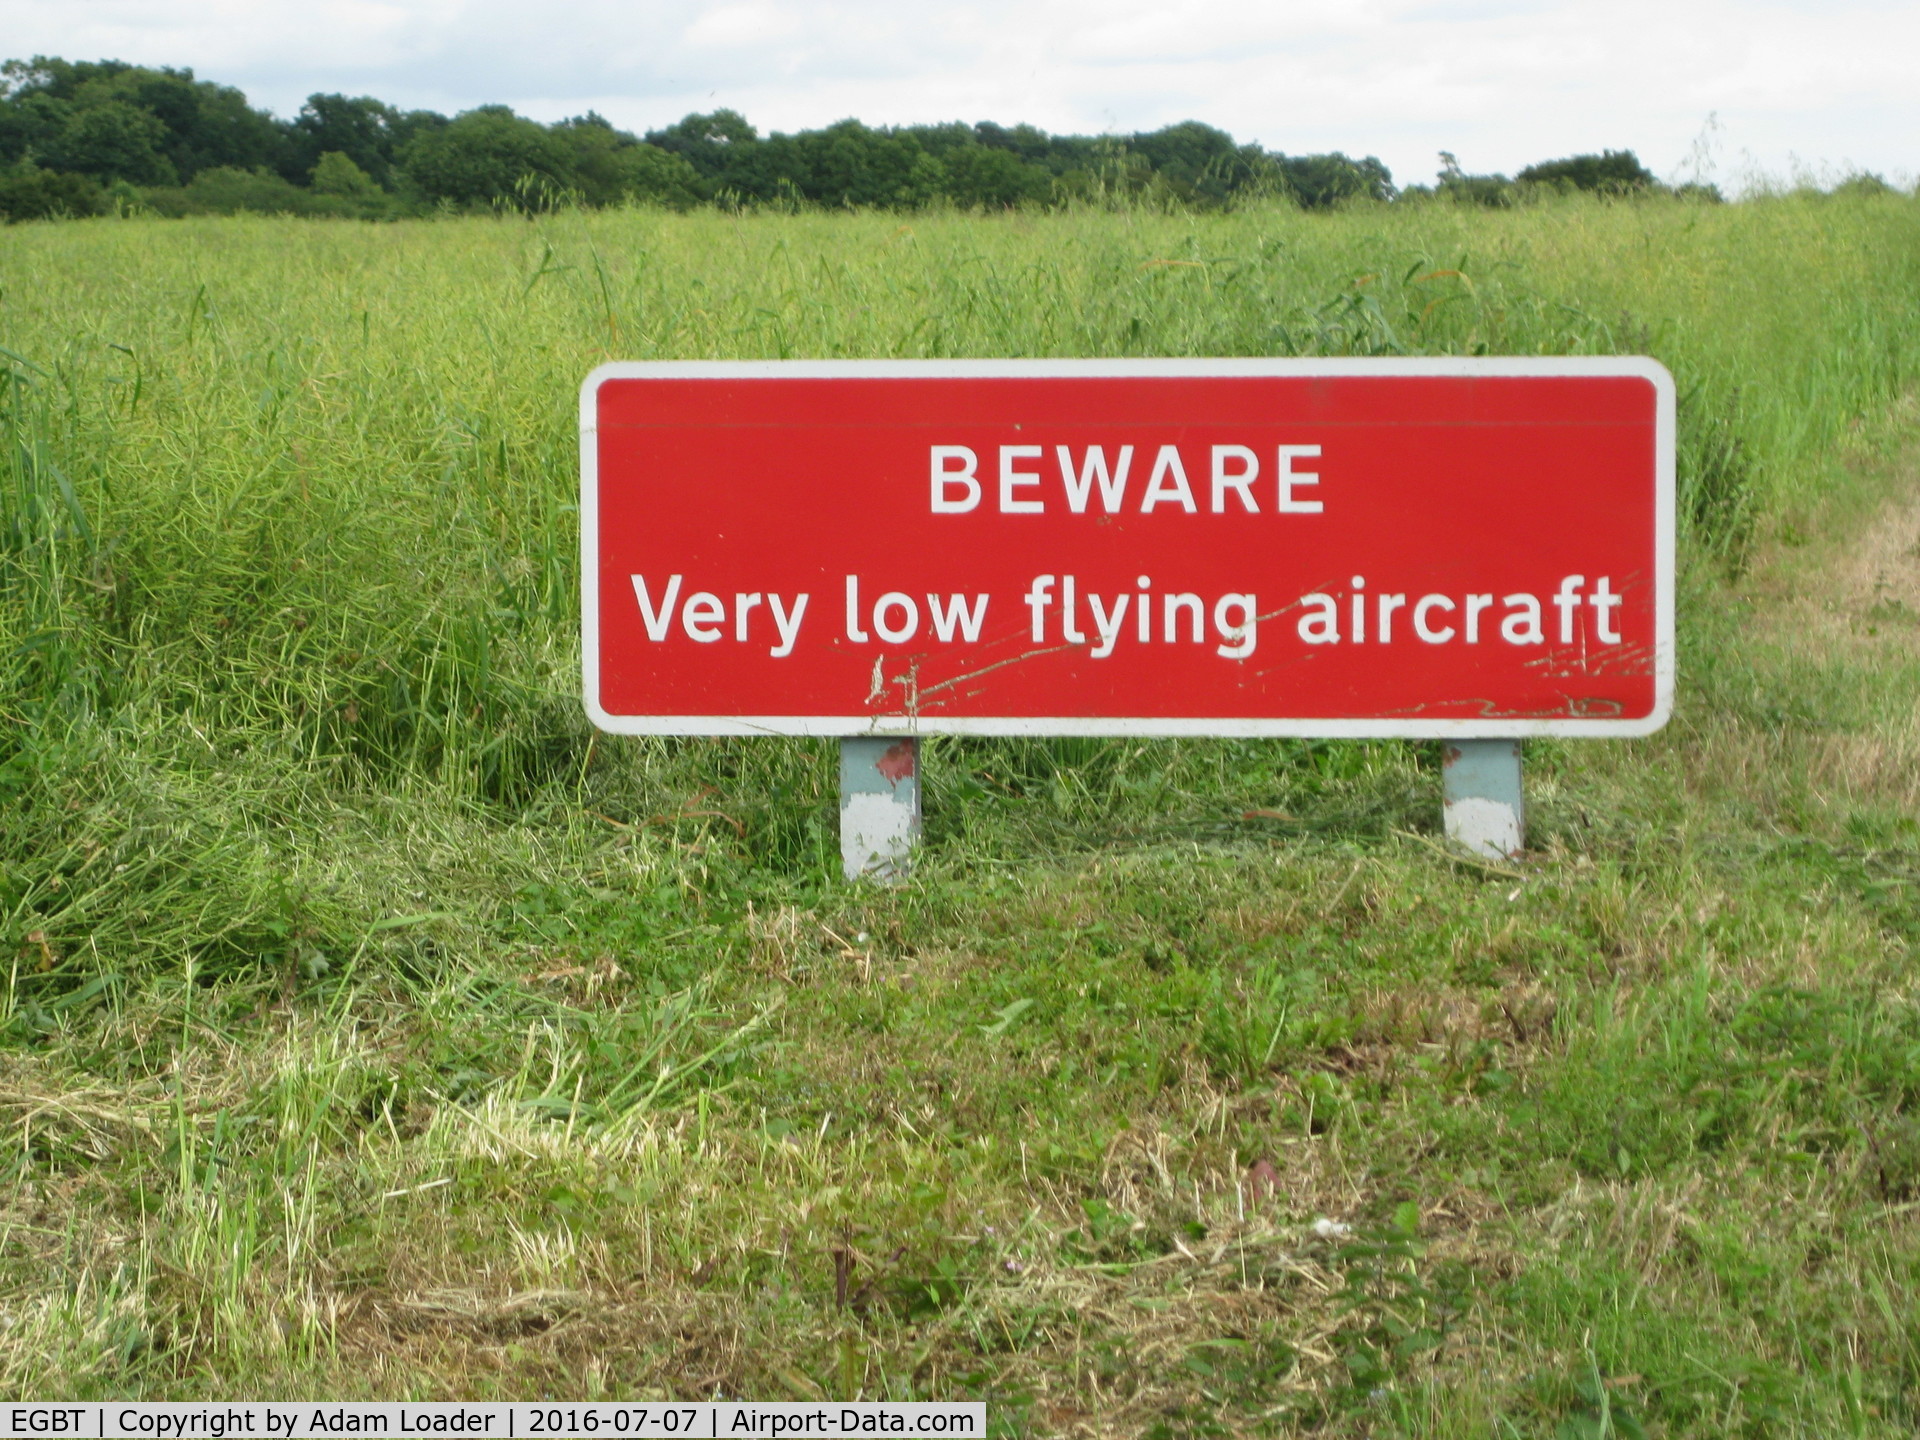 Turweston Aerodrome Airport, Turweston, England United Kingdom (EGBT) - My favourite sign 